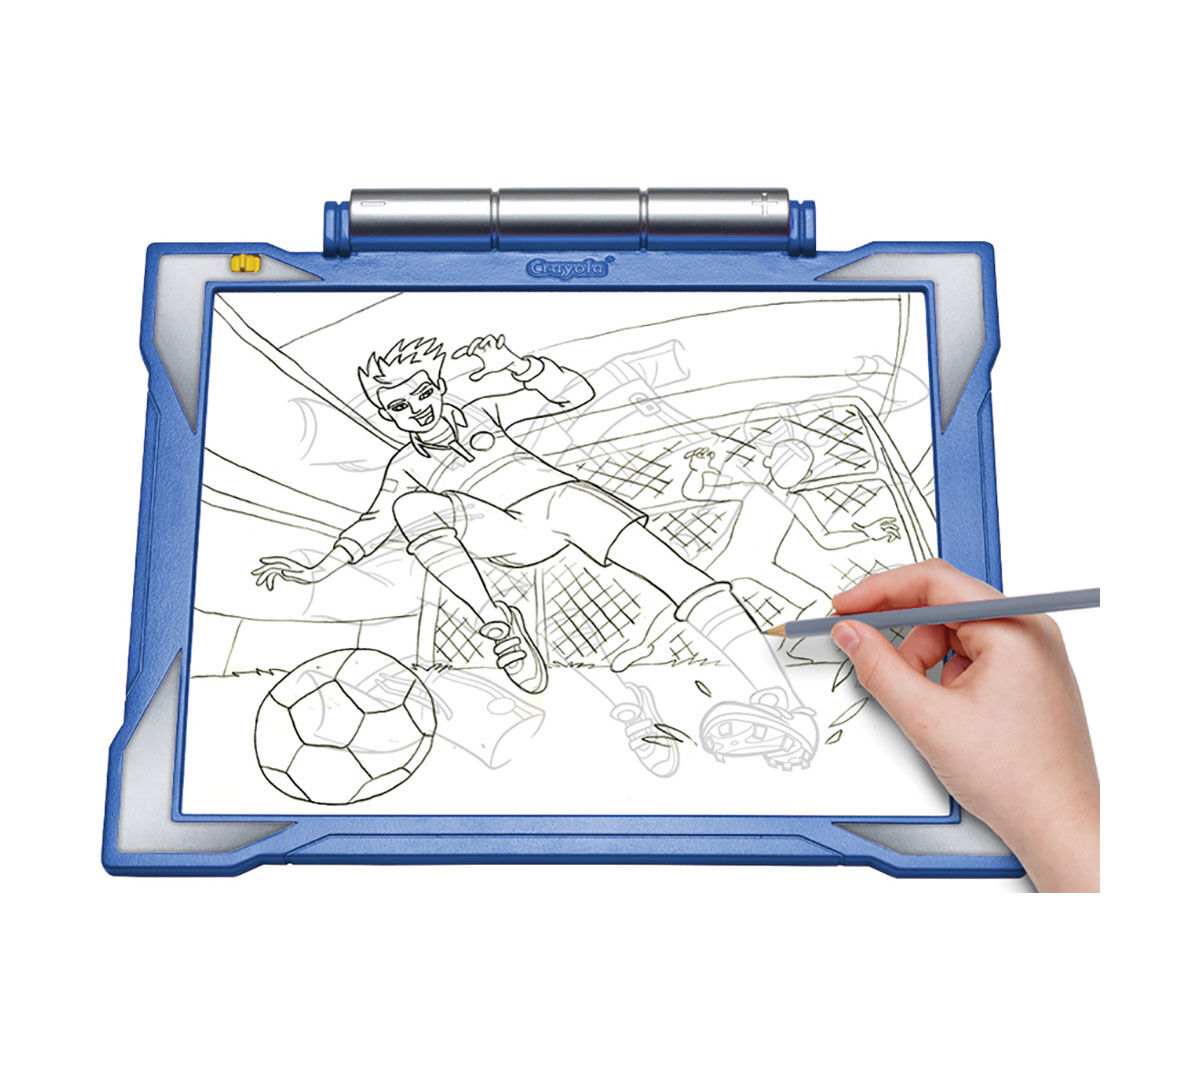 crayola-light-up-tracing-pad-blue-art-tool-bright-leds-easy